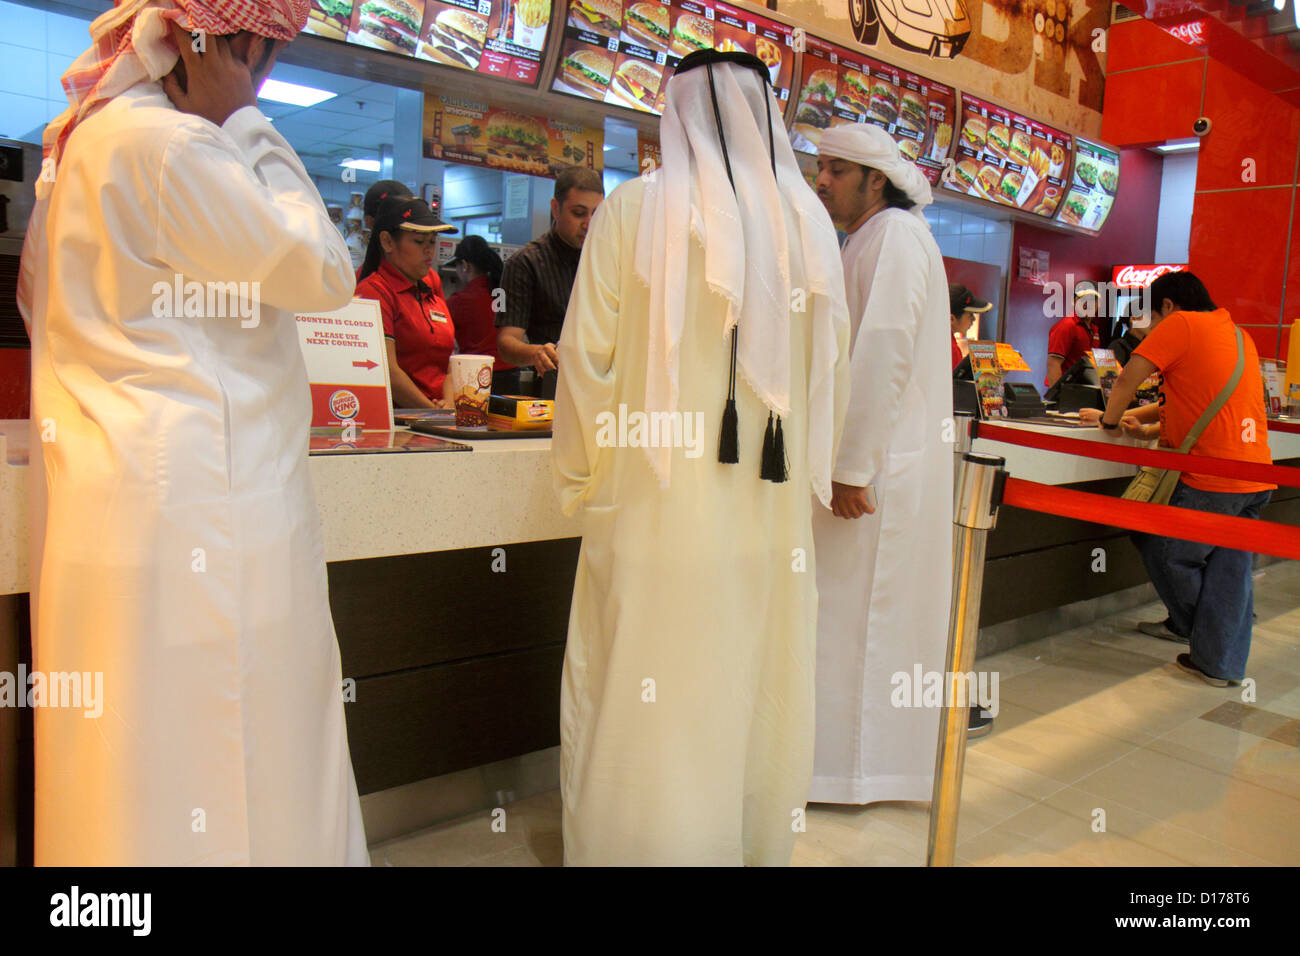 Dubai UAE,Emirati Arabi Uniti,Downtown Dubai,Dubai Mall,food Court plaza,Musulmani,Bedouin,uomini musulmani etnici maschi adulti,scialle,accappatoio,keffiyeh,B Foto Stock